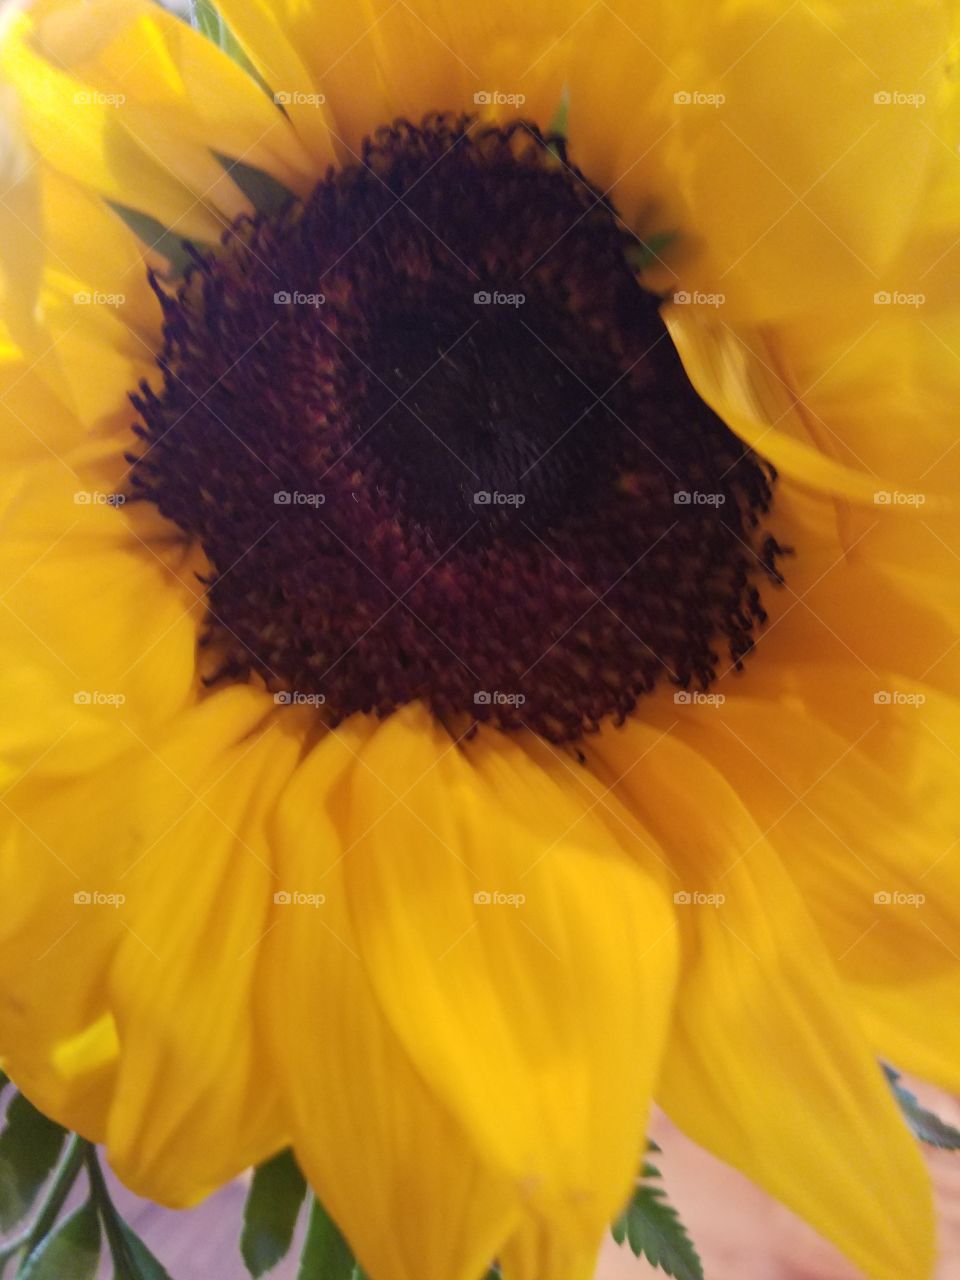 Sunflower bliss